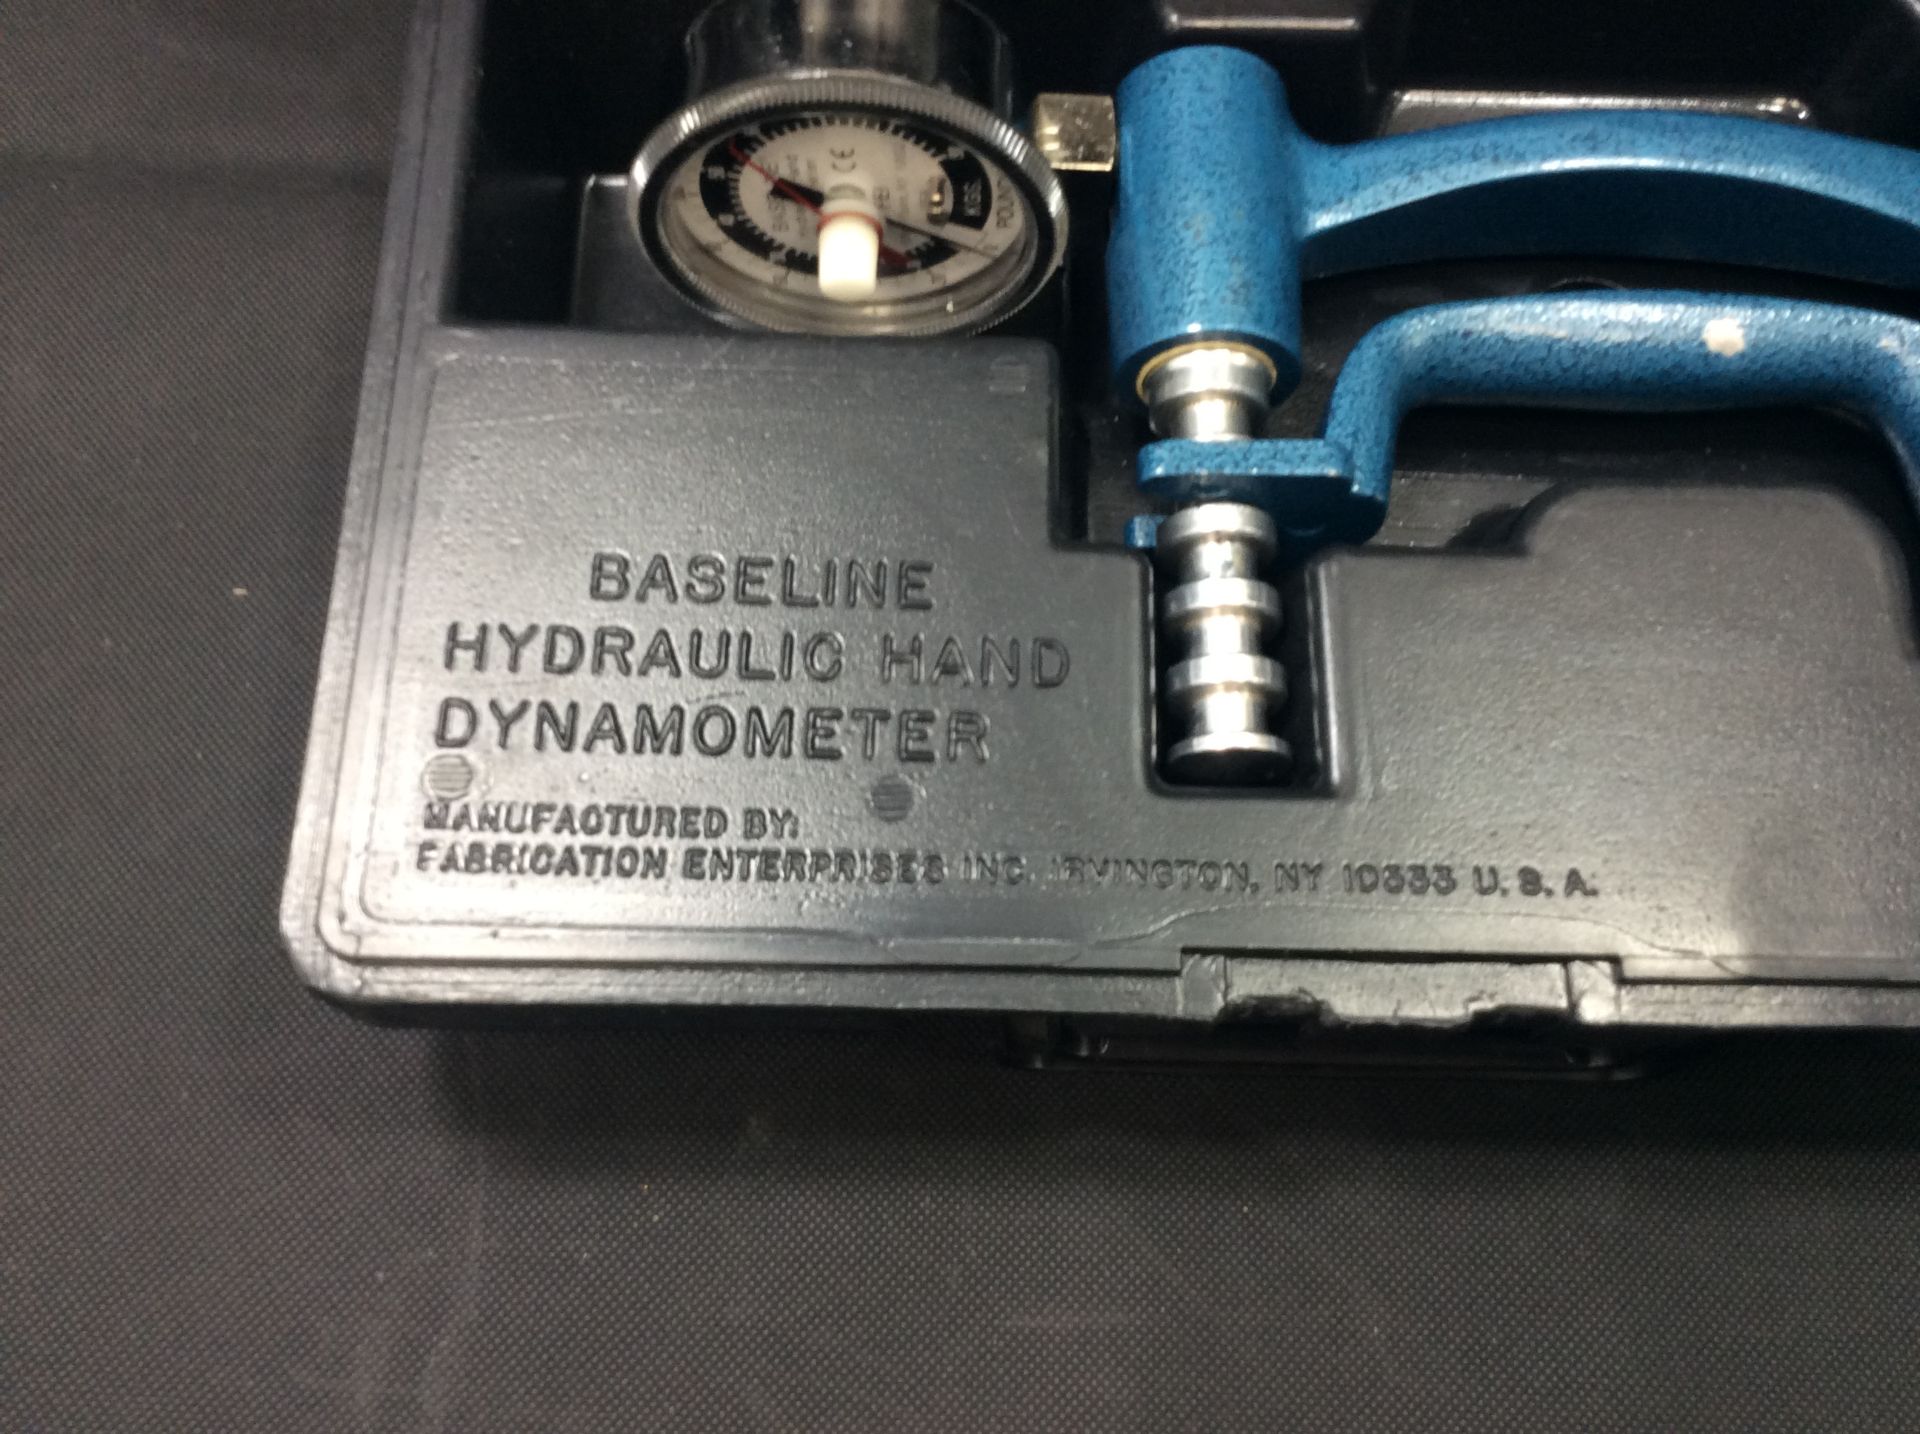 Baseline hydraulic hand dynamometer - Image 2 of 3